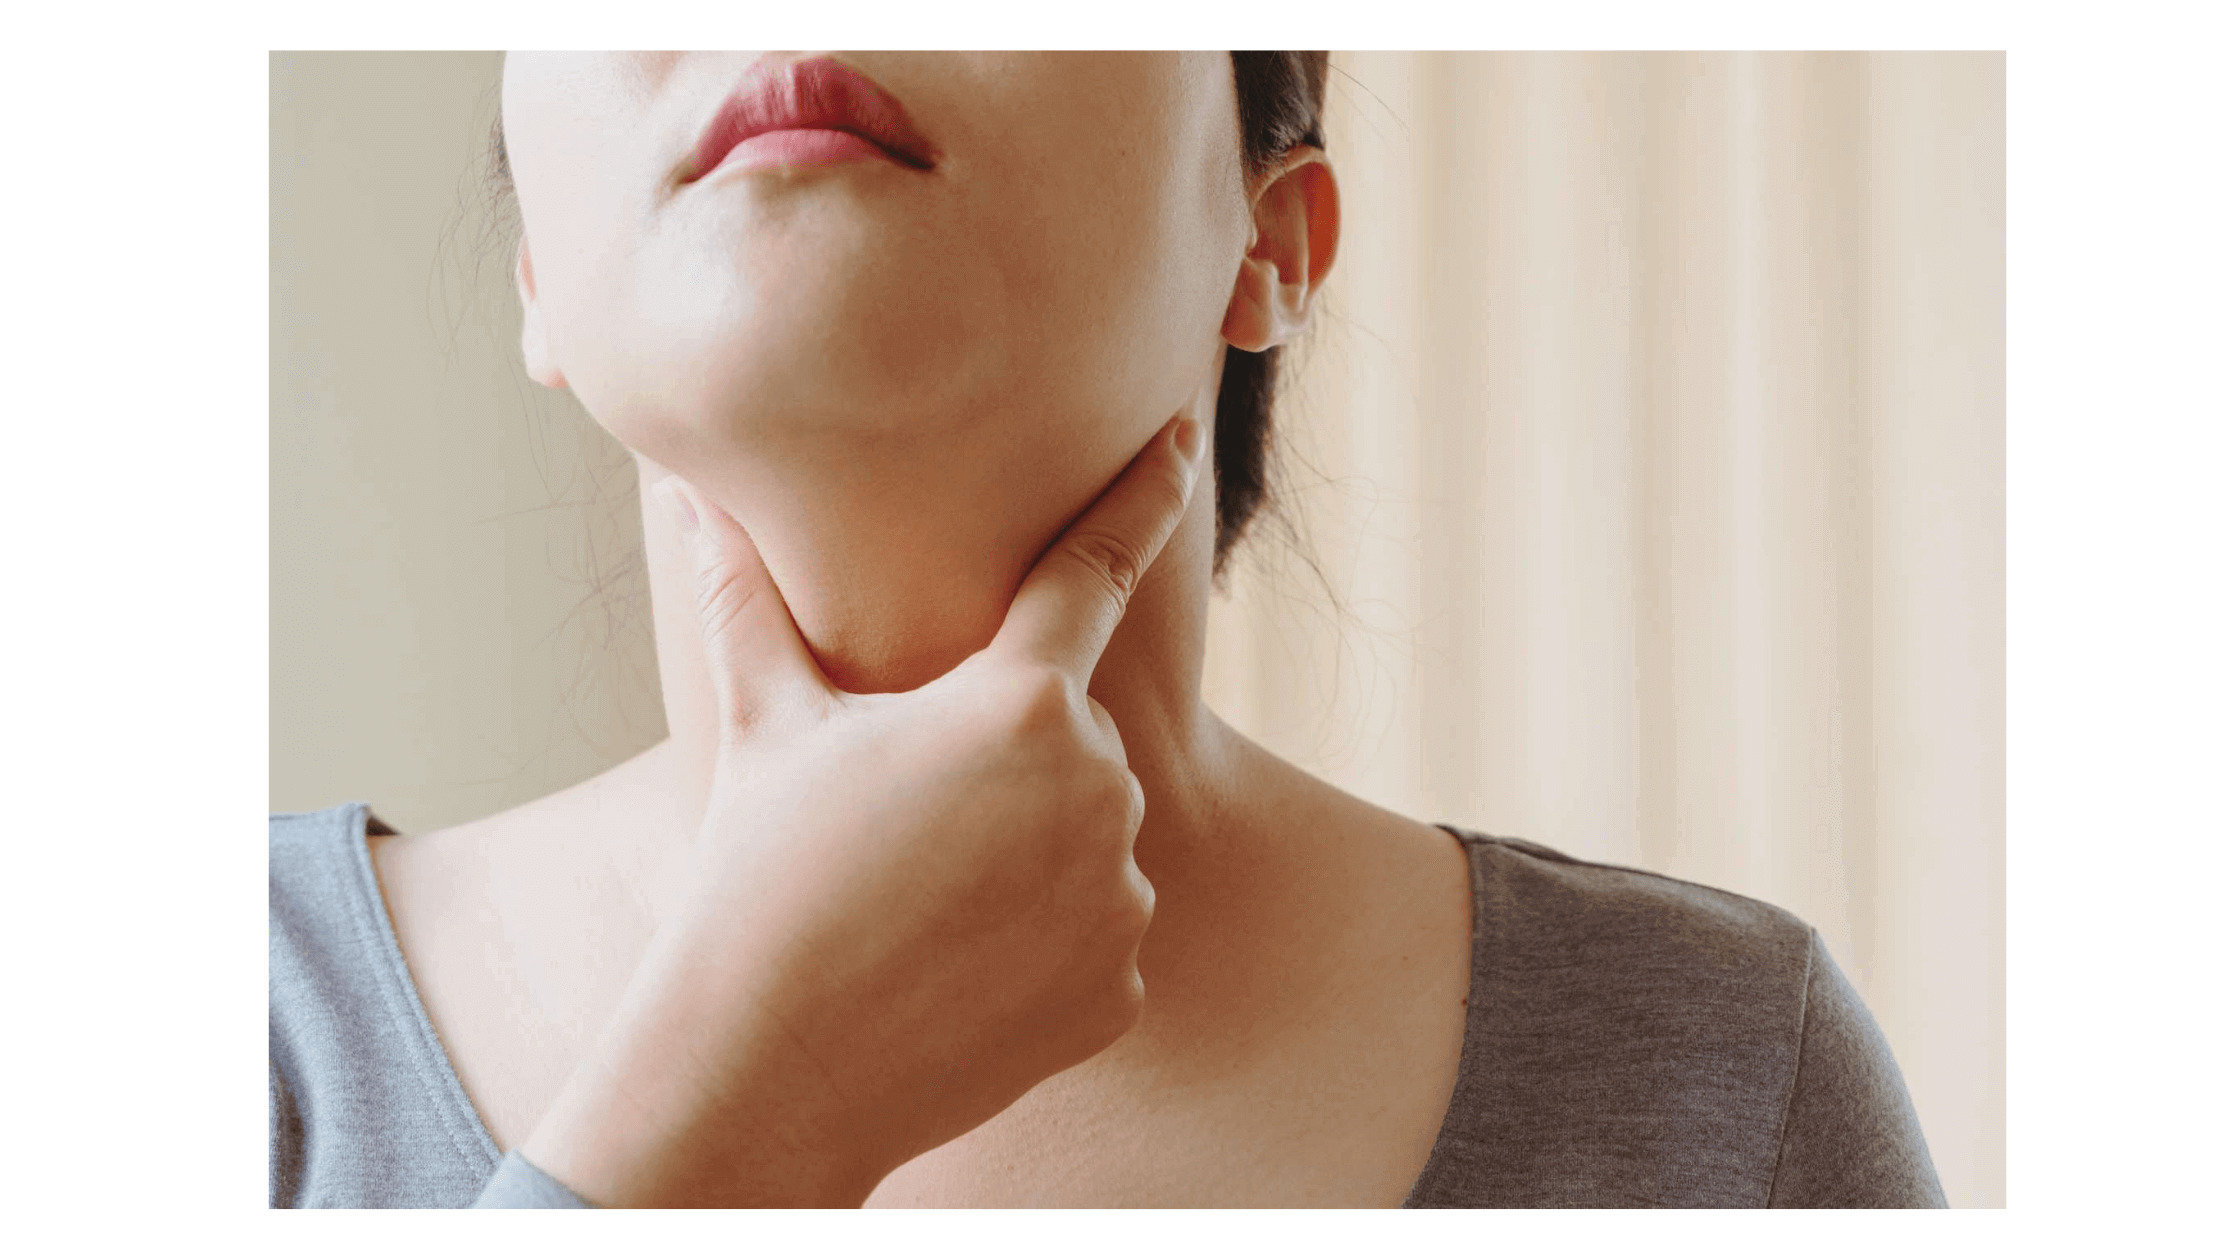 The hypothyroidism solution - throat